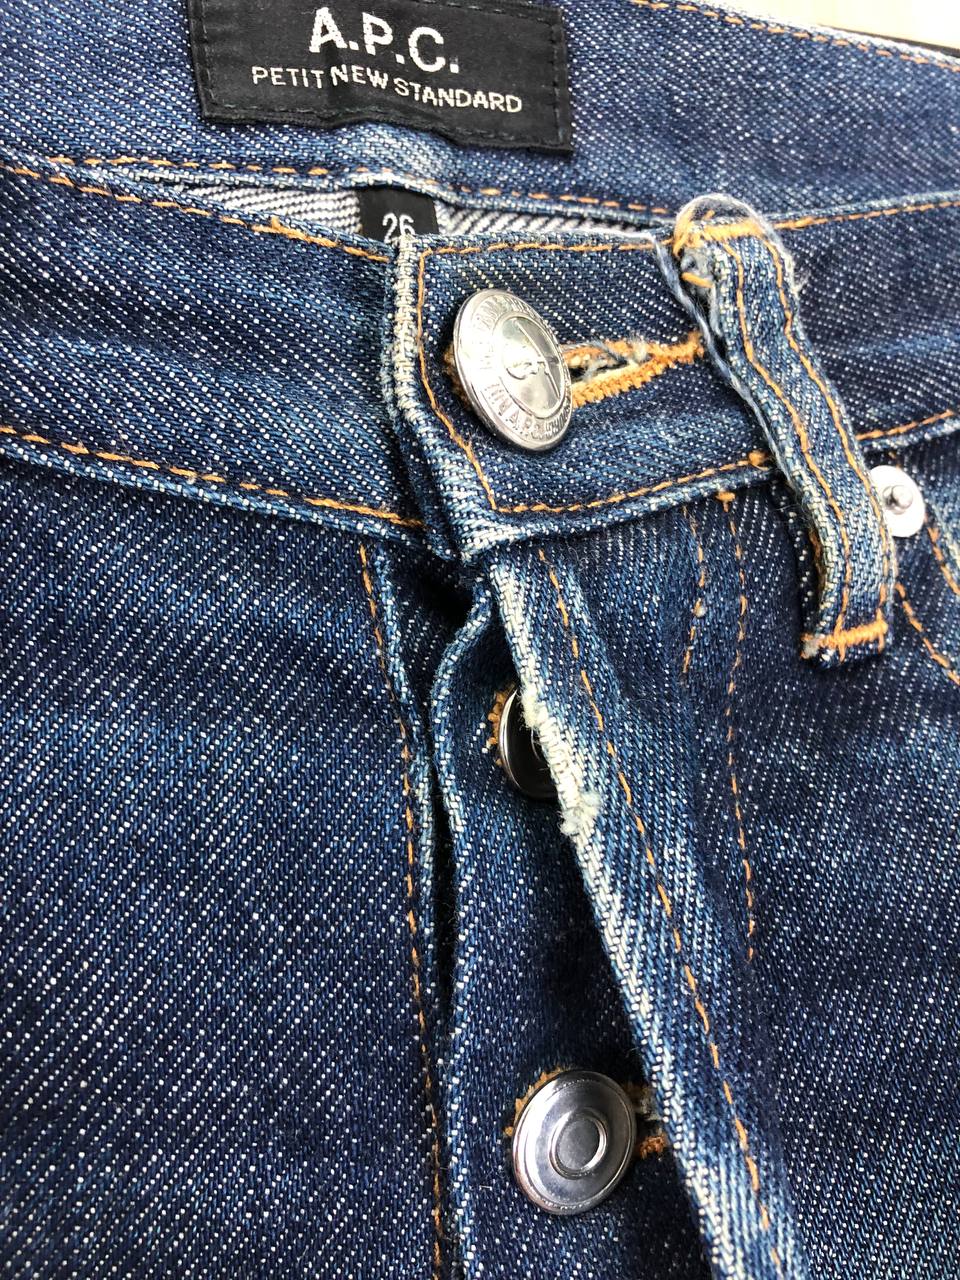 APC Petit Standard Jeans Distressed Selvedge - 9